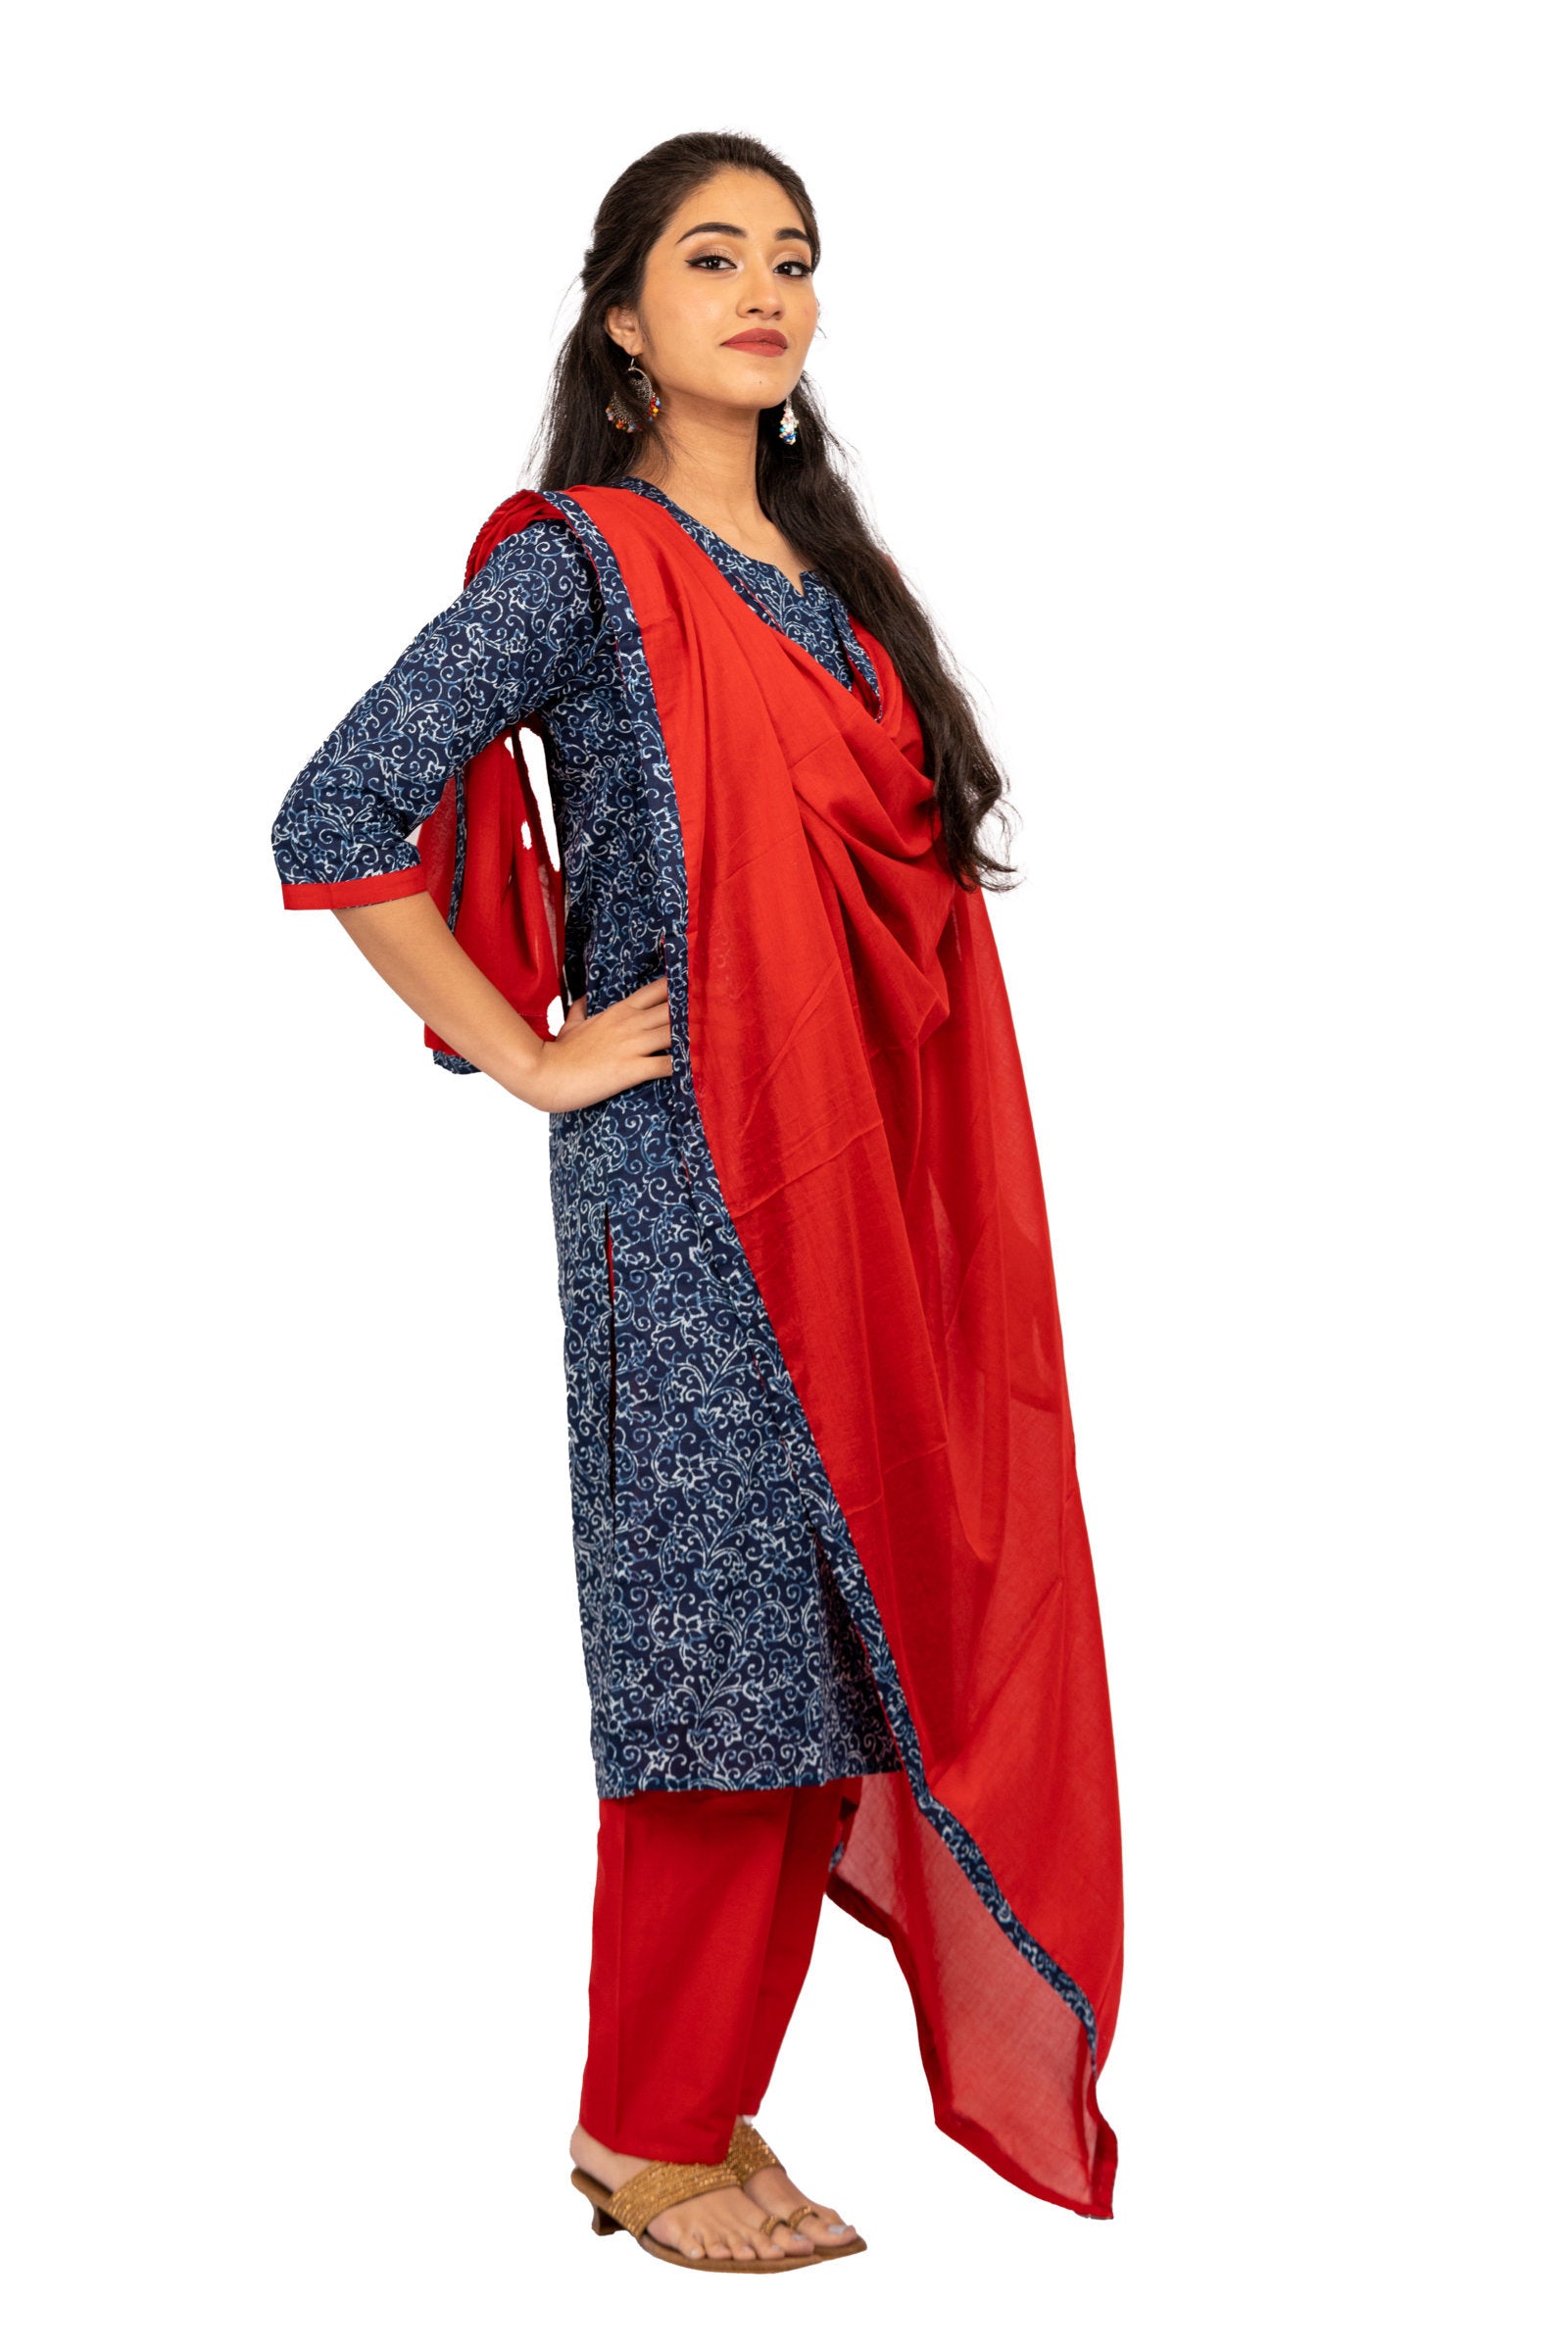 3 Piece Salwar - 100% Cotton indigo blue salwar with white floral prints. Plain red 2 metre long dupatta with edge design matching the salwar fabric. Plain red pants matching the dupatta.